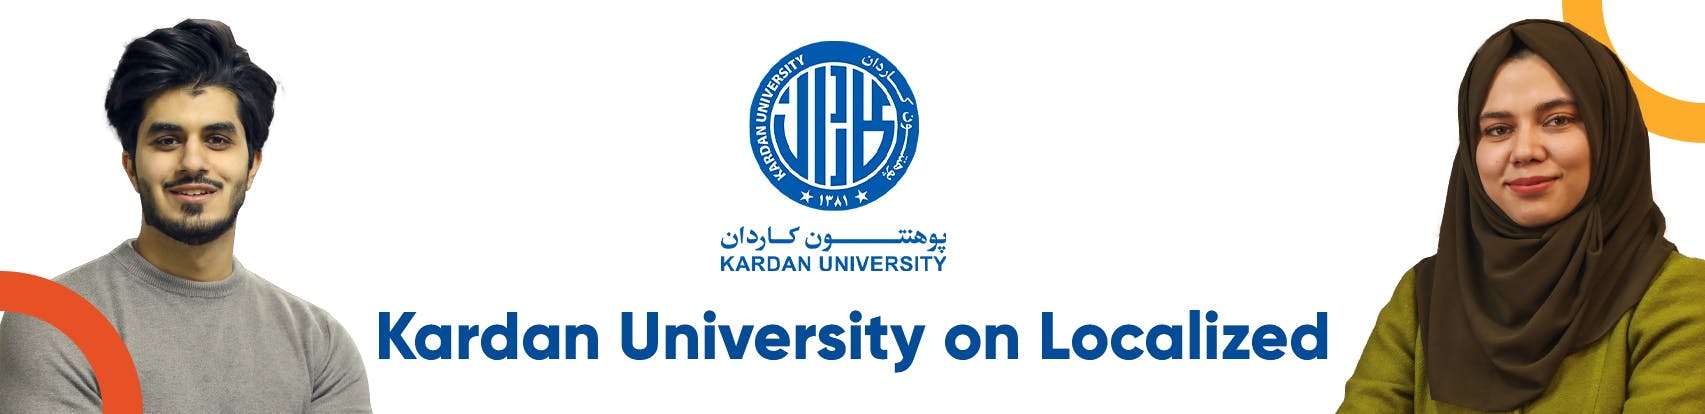 Kardan University